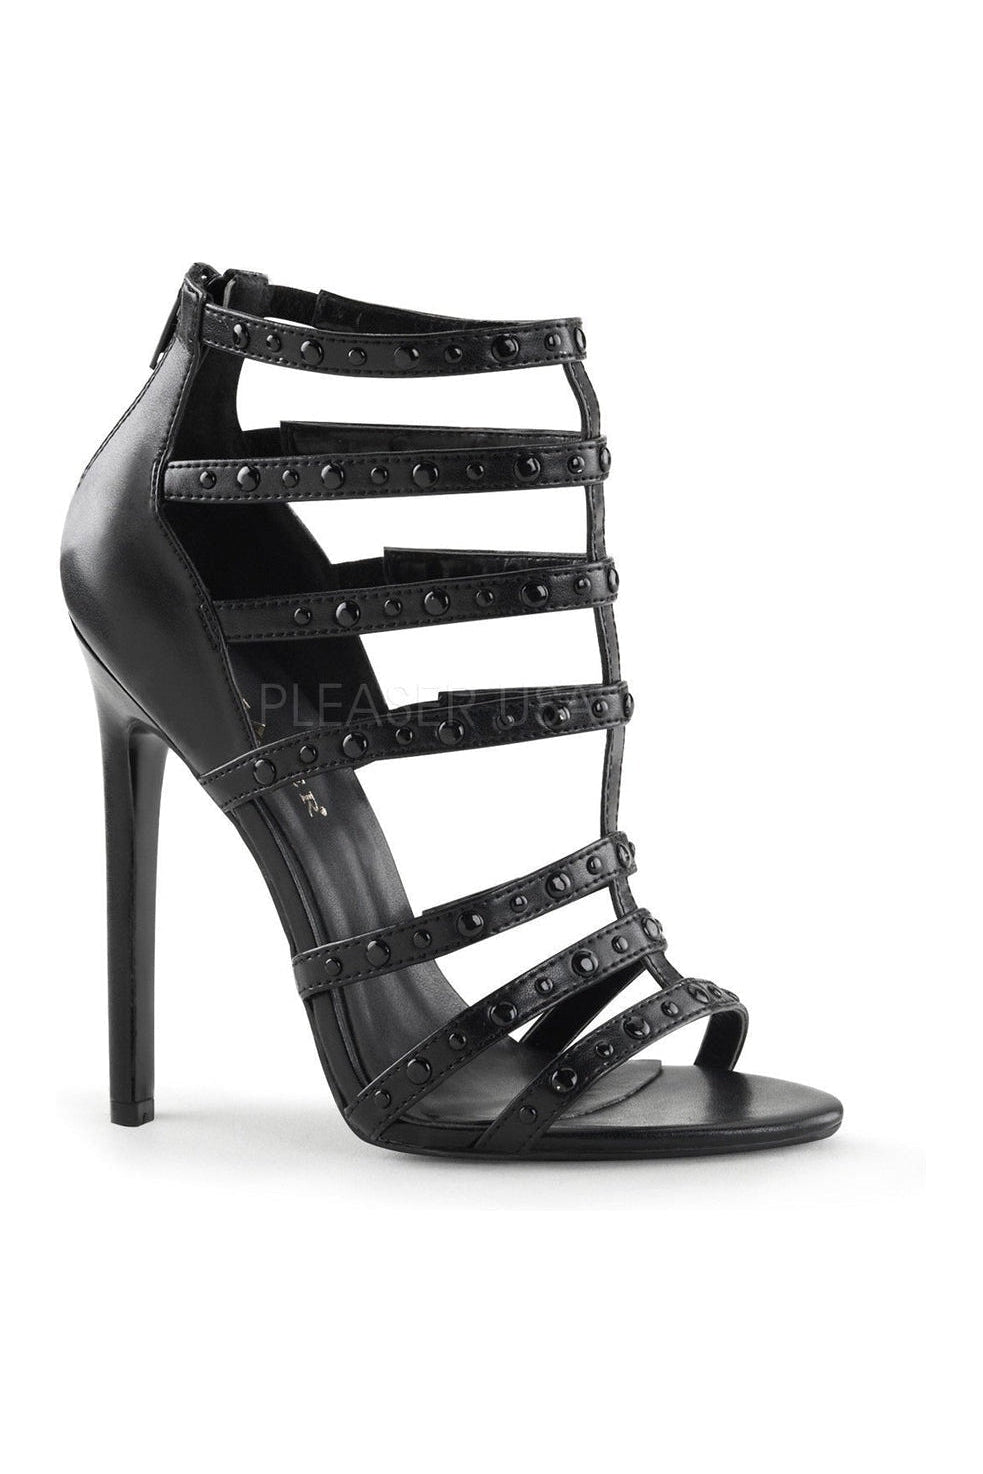 SEXY-15 Sandal | Black Faux Leather-Pleaser-Black-Sandals-SEXYSHOES.COM